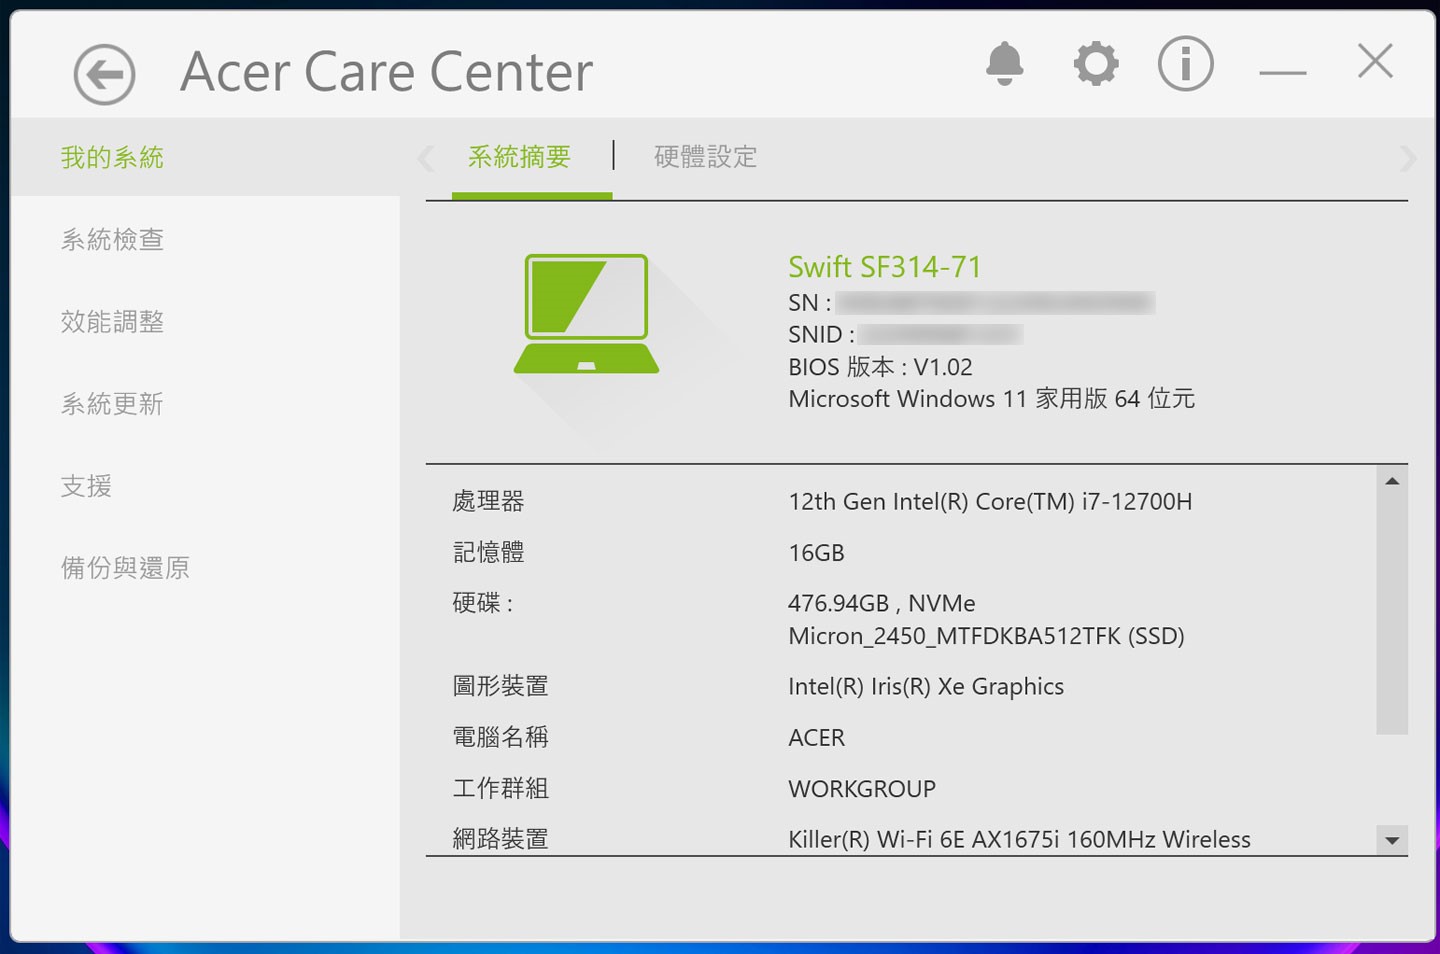 Acer Care Center 也以分頁式計來區別不同的功能，包括「我的系統」可查閱系統摘要與硬體定資訊。